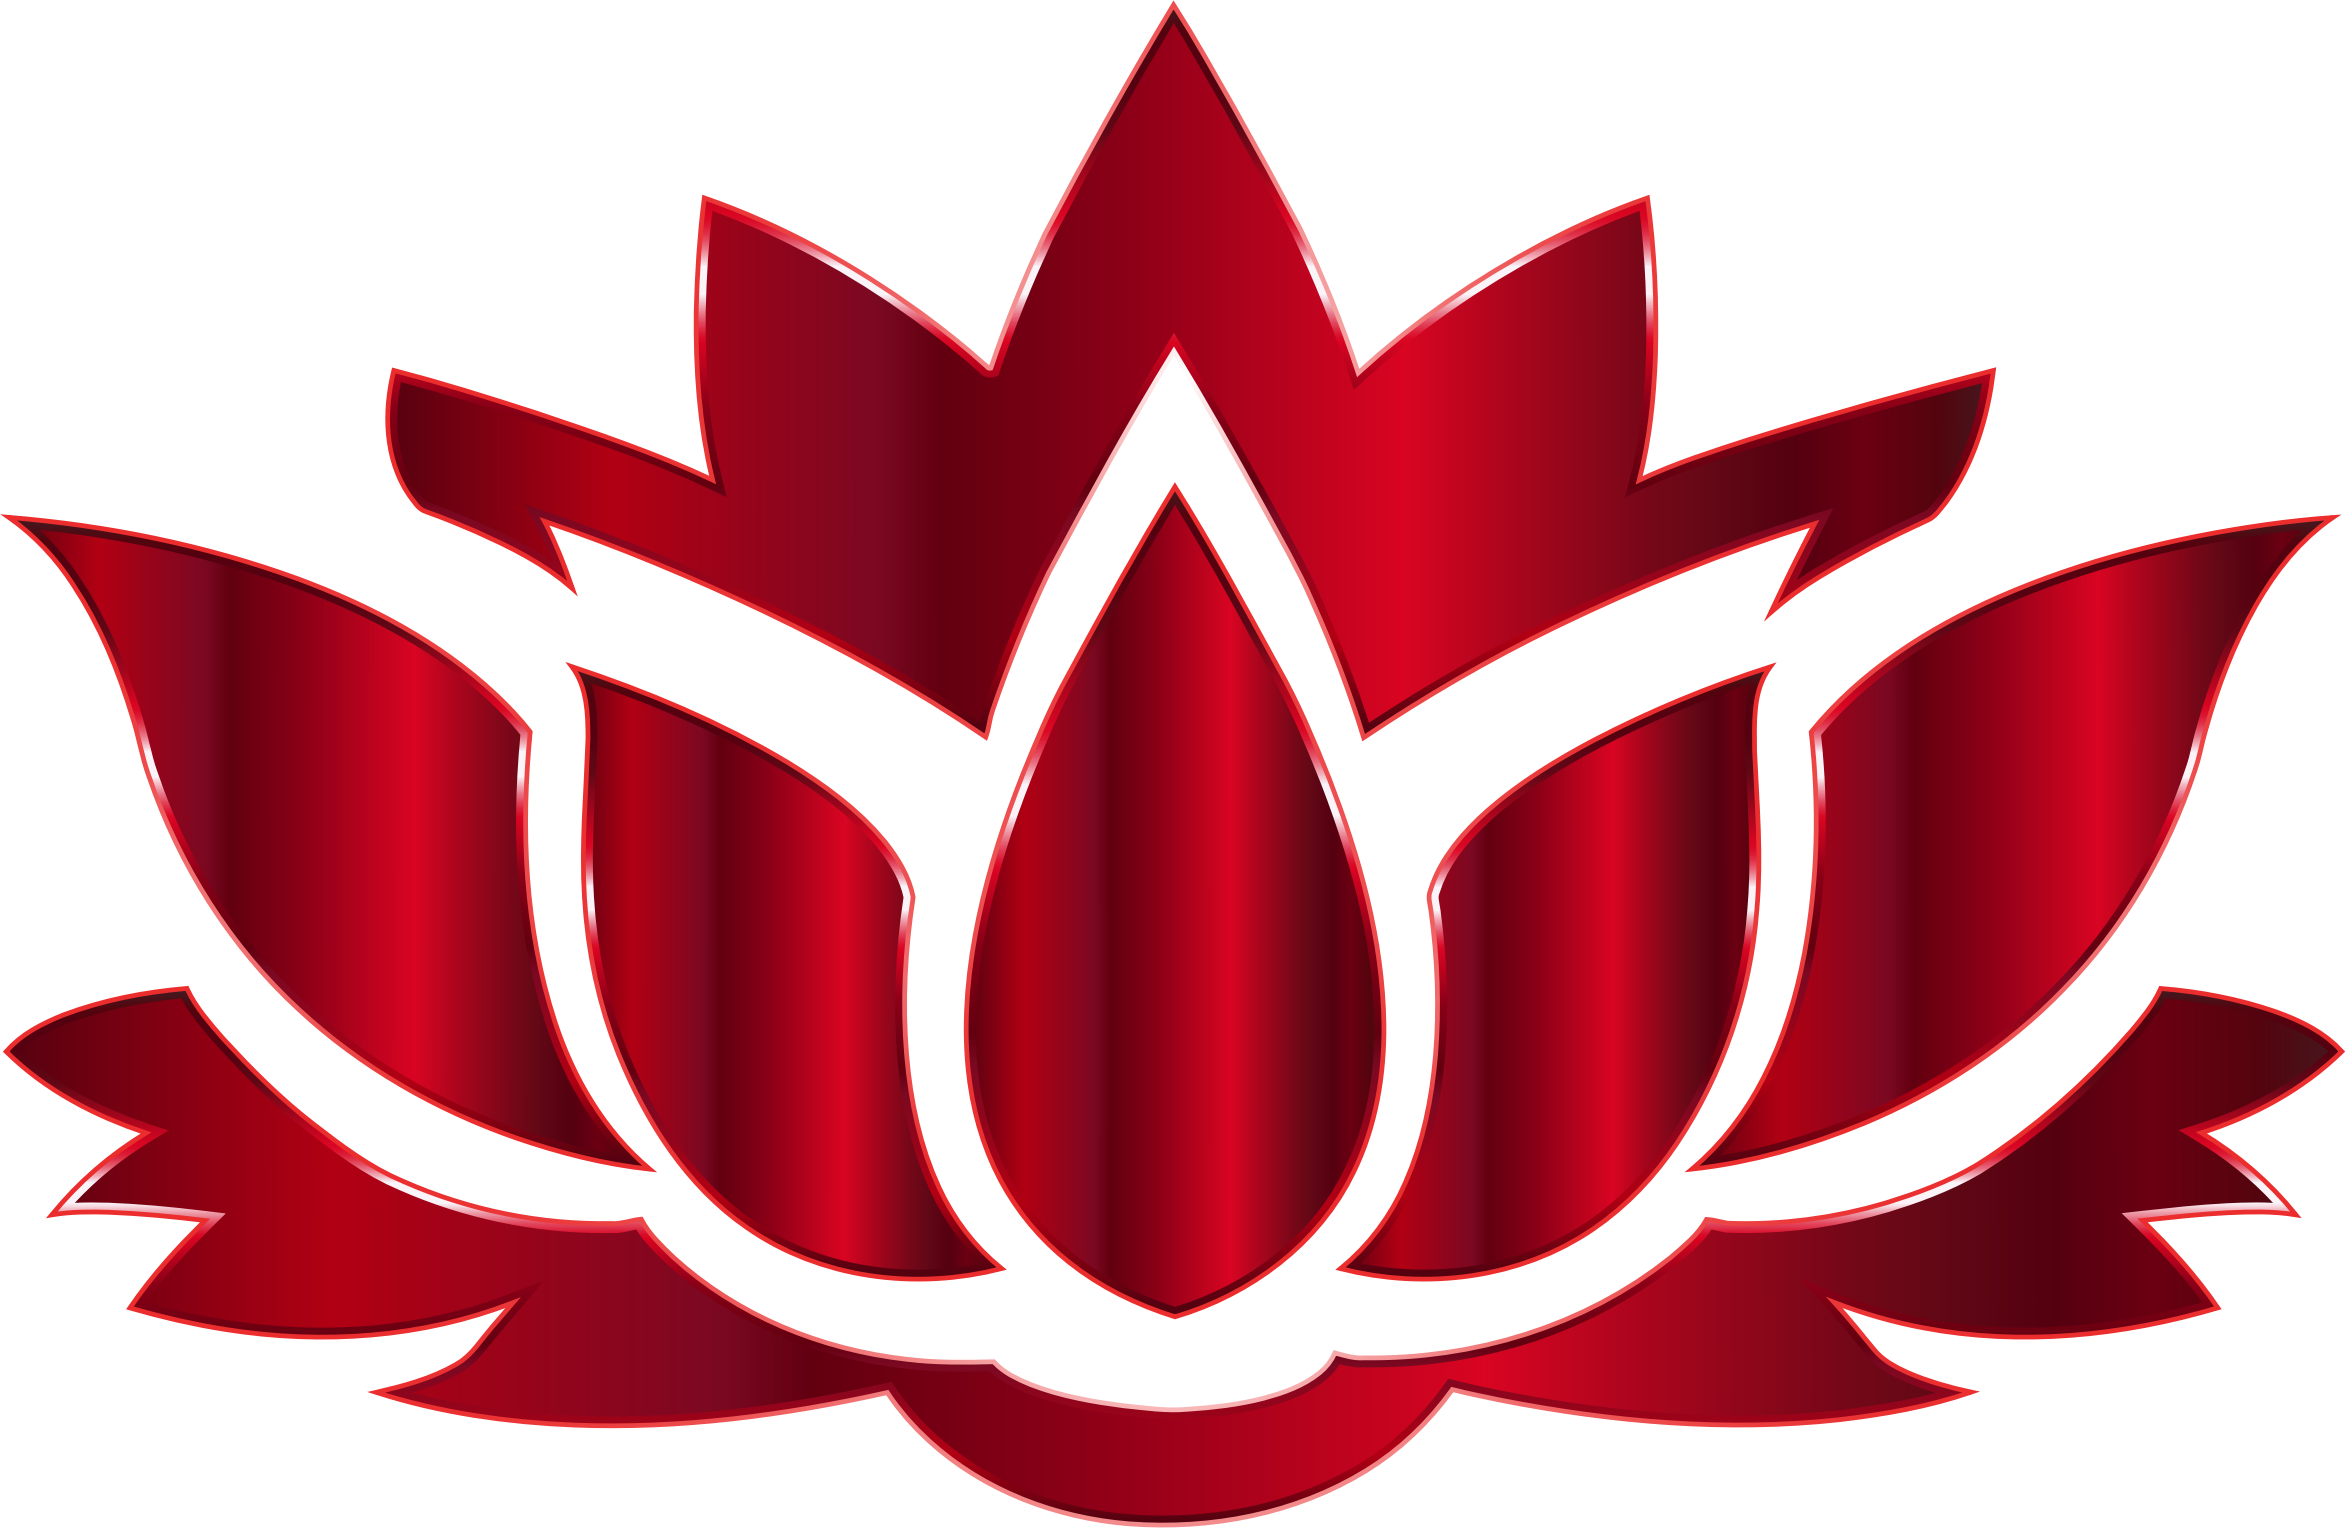 Clipart - Vermillion Lotus Flower Silhouette No Background